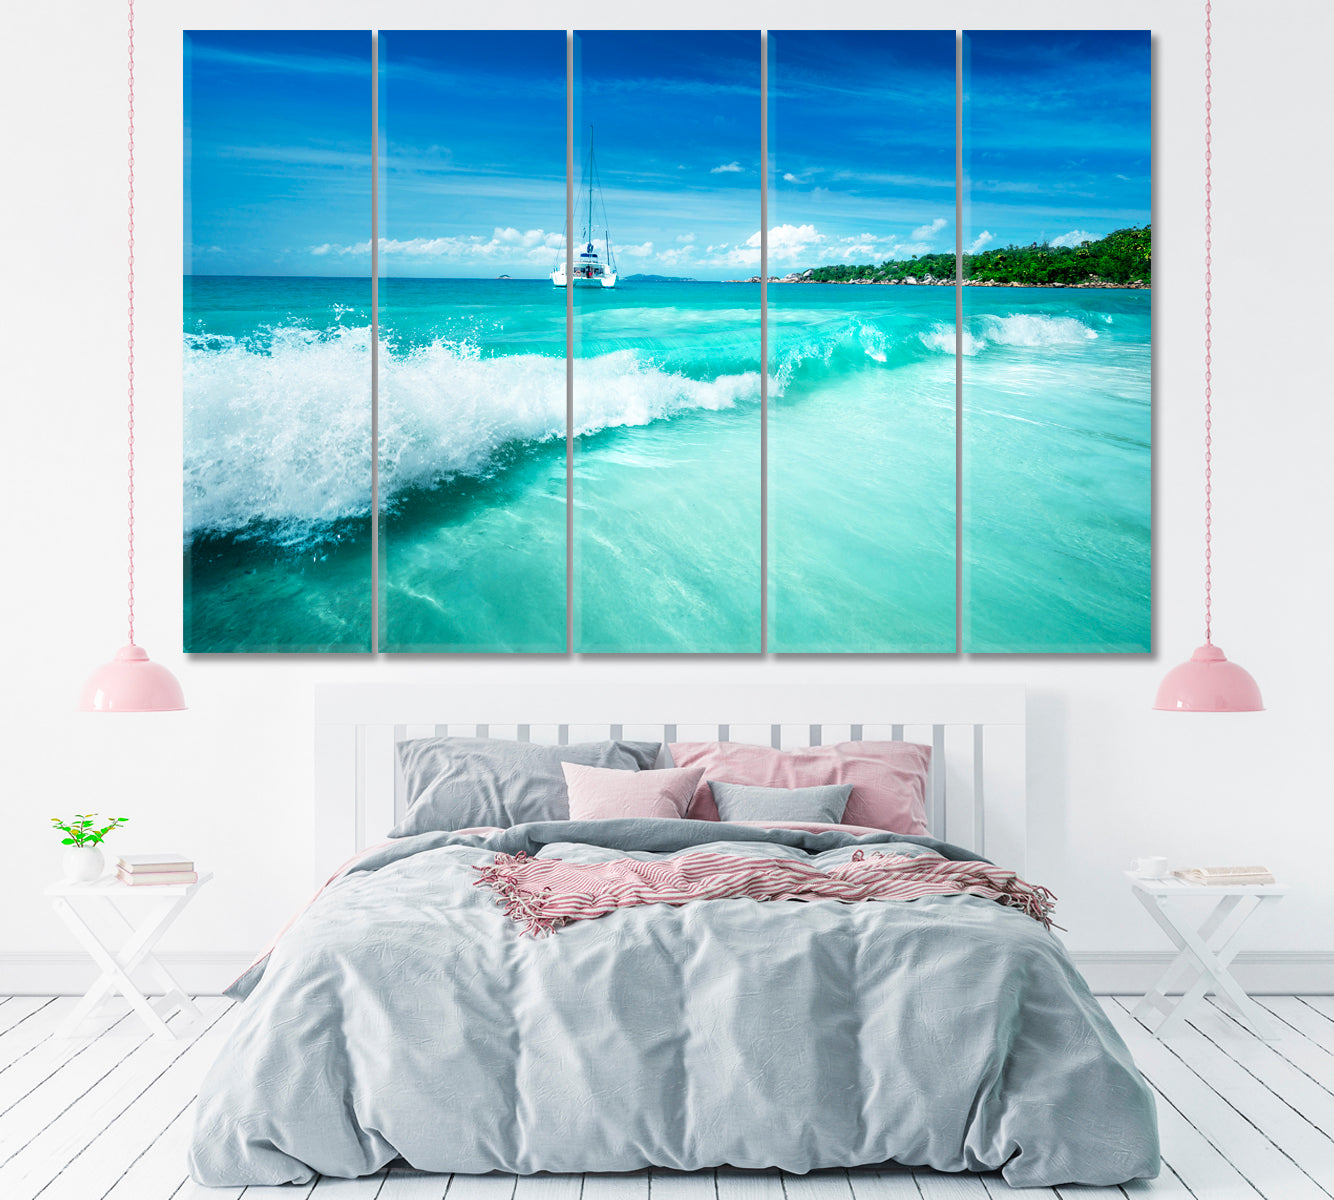 Beach "Anse Lazio" Praslin Seychelles Canvas Print ArtLexy 5 Panels 36"x24" inches 